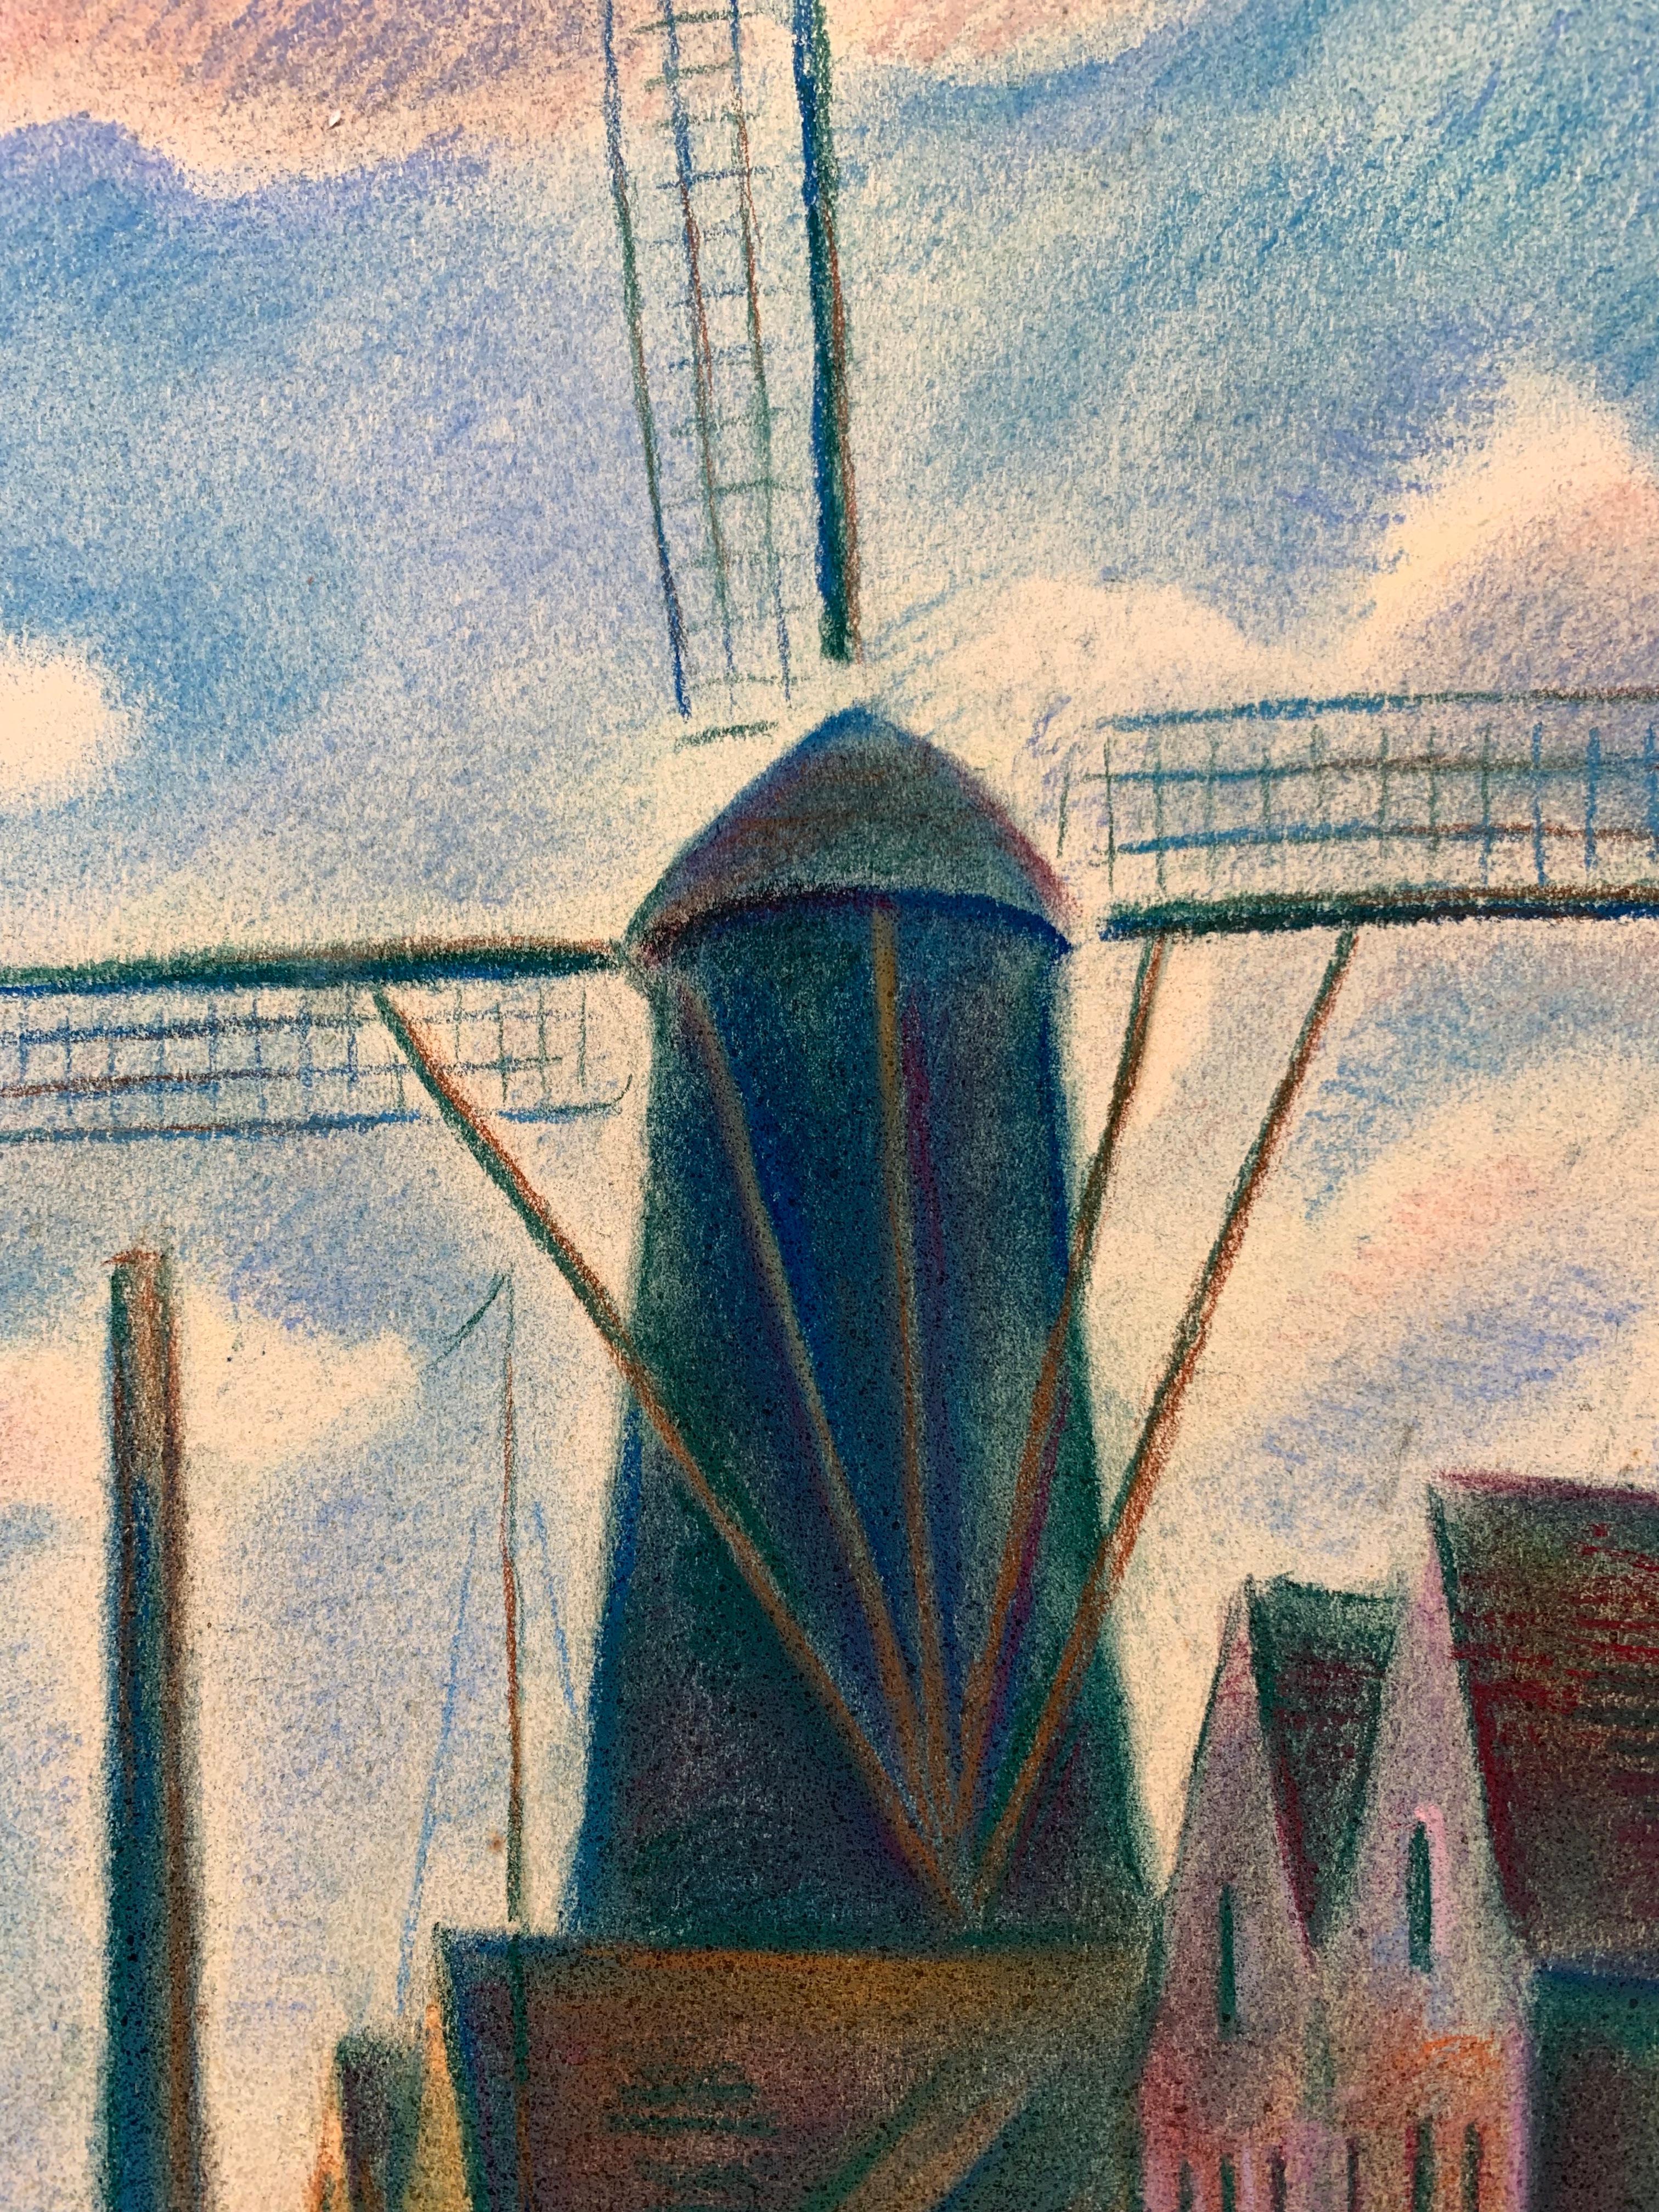 Theodor Alescha (1898-1991). Netherlands harbor scene, ca. 1935. Pastel on paper mounted to illustration board, 18 x 24 inches. Measures 24 x 30 inches framed. Signiert unten rechts. Ausgezeichneter Zustand. 

Theodor Alescha was born in 1898 in